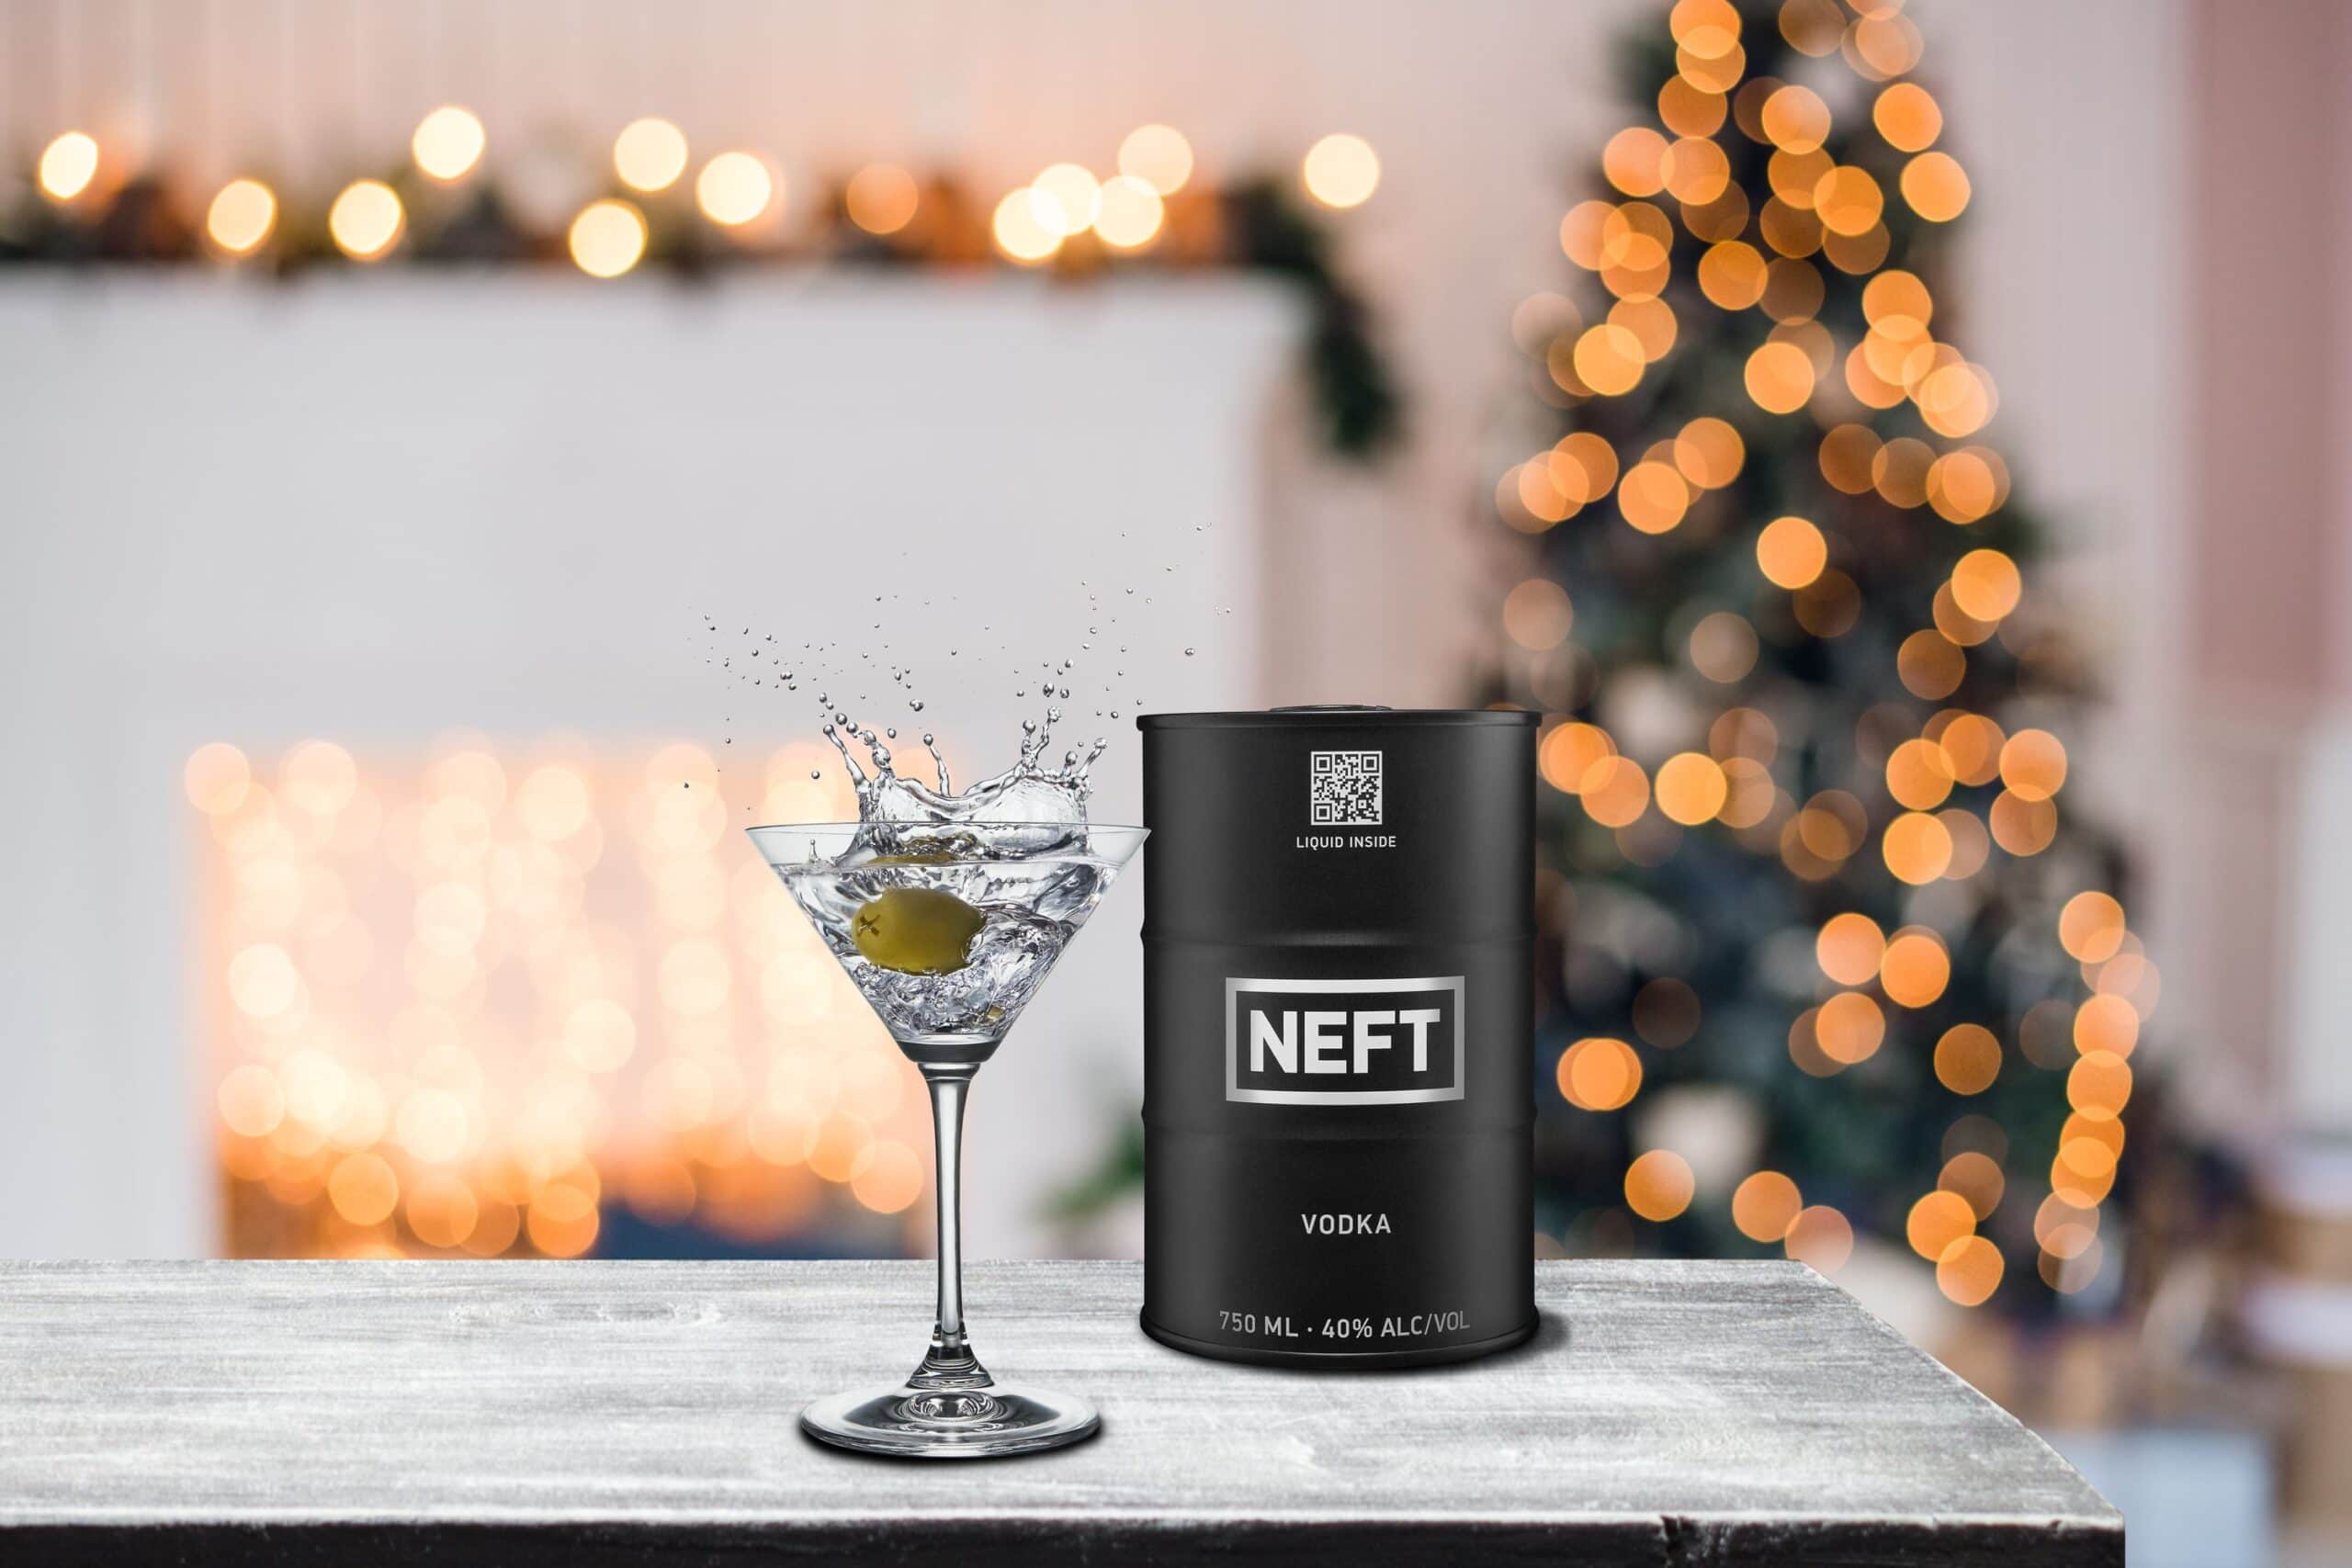 Box of NEFT vodka and martini glass